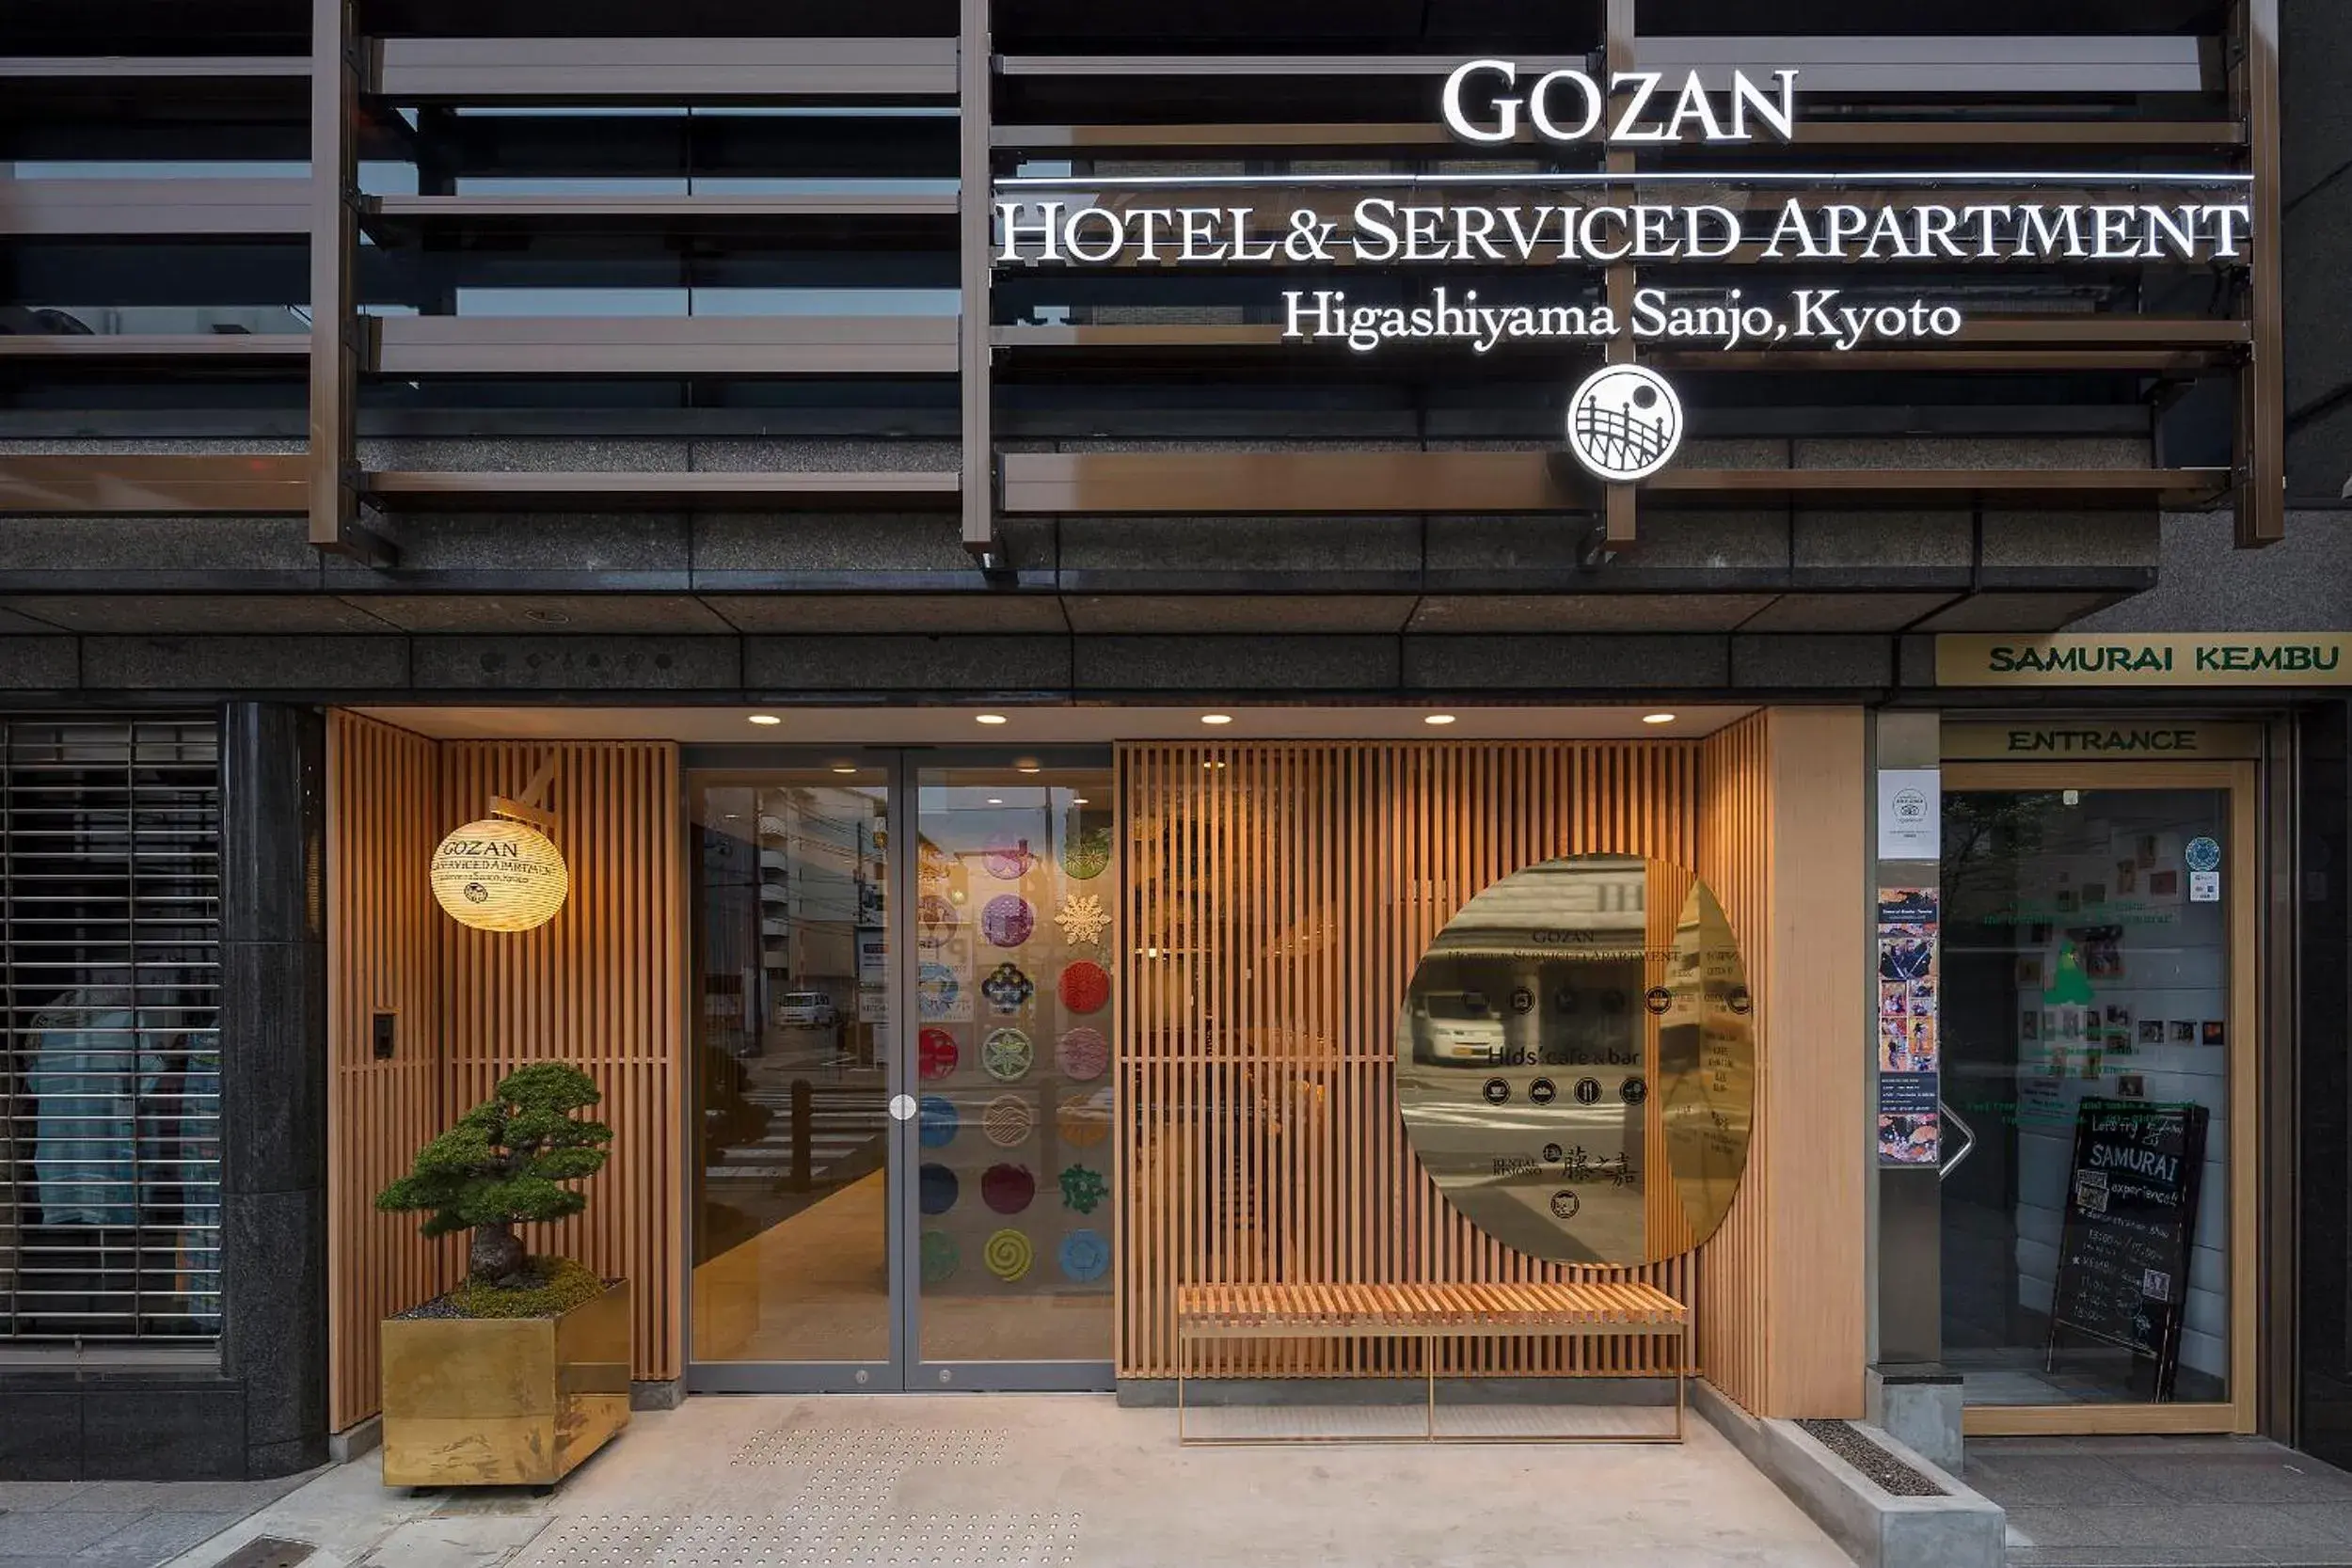 Facade/entrance in Gozan Hotel & Serviced Apartment Higashiyama Sanjo